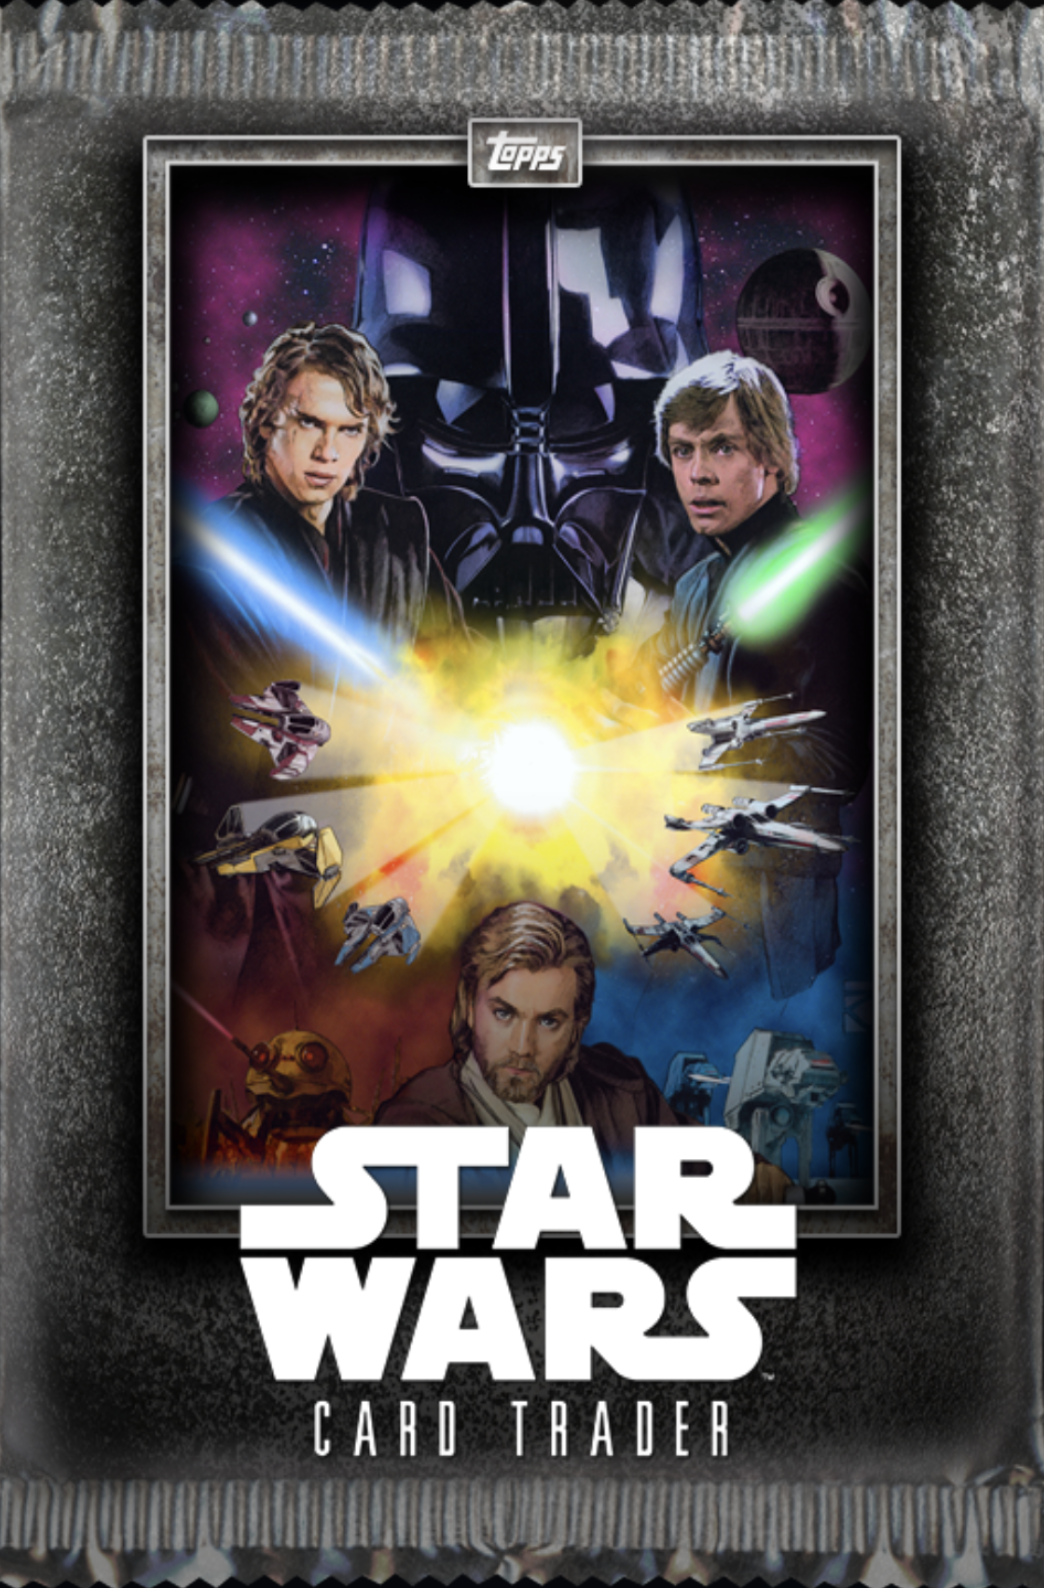 Base Series 1 CHROME THE CHILD *Digital Topps Star Wars Card Trader - 2020